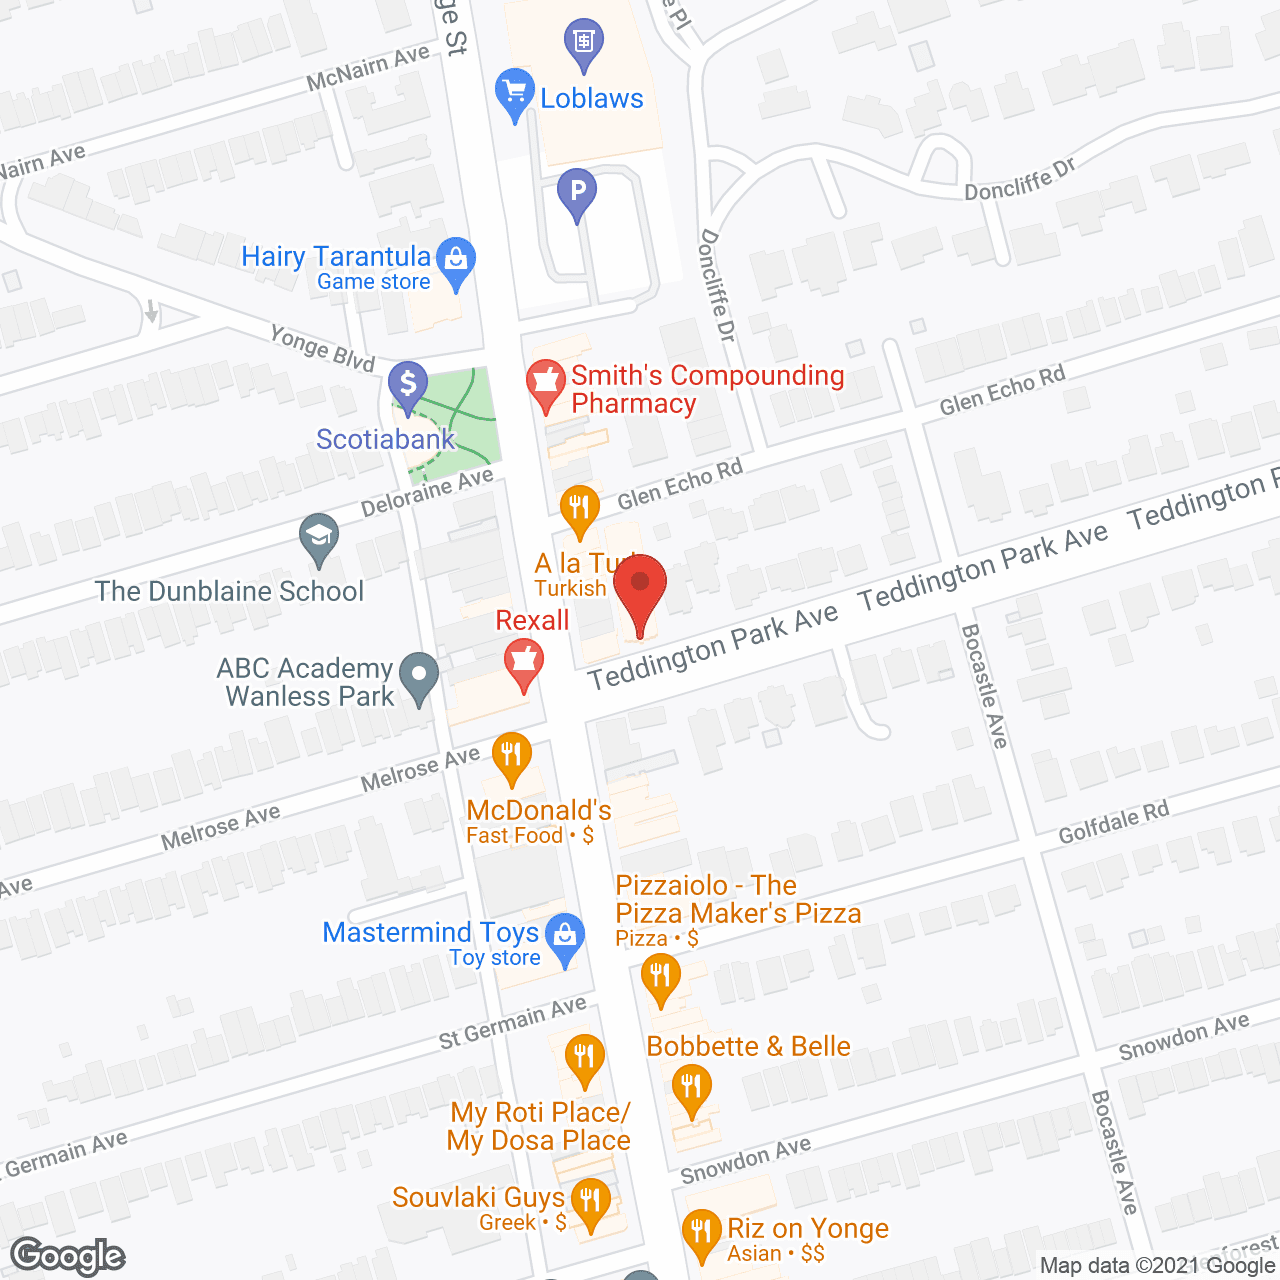 The Teddington in google map